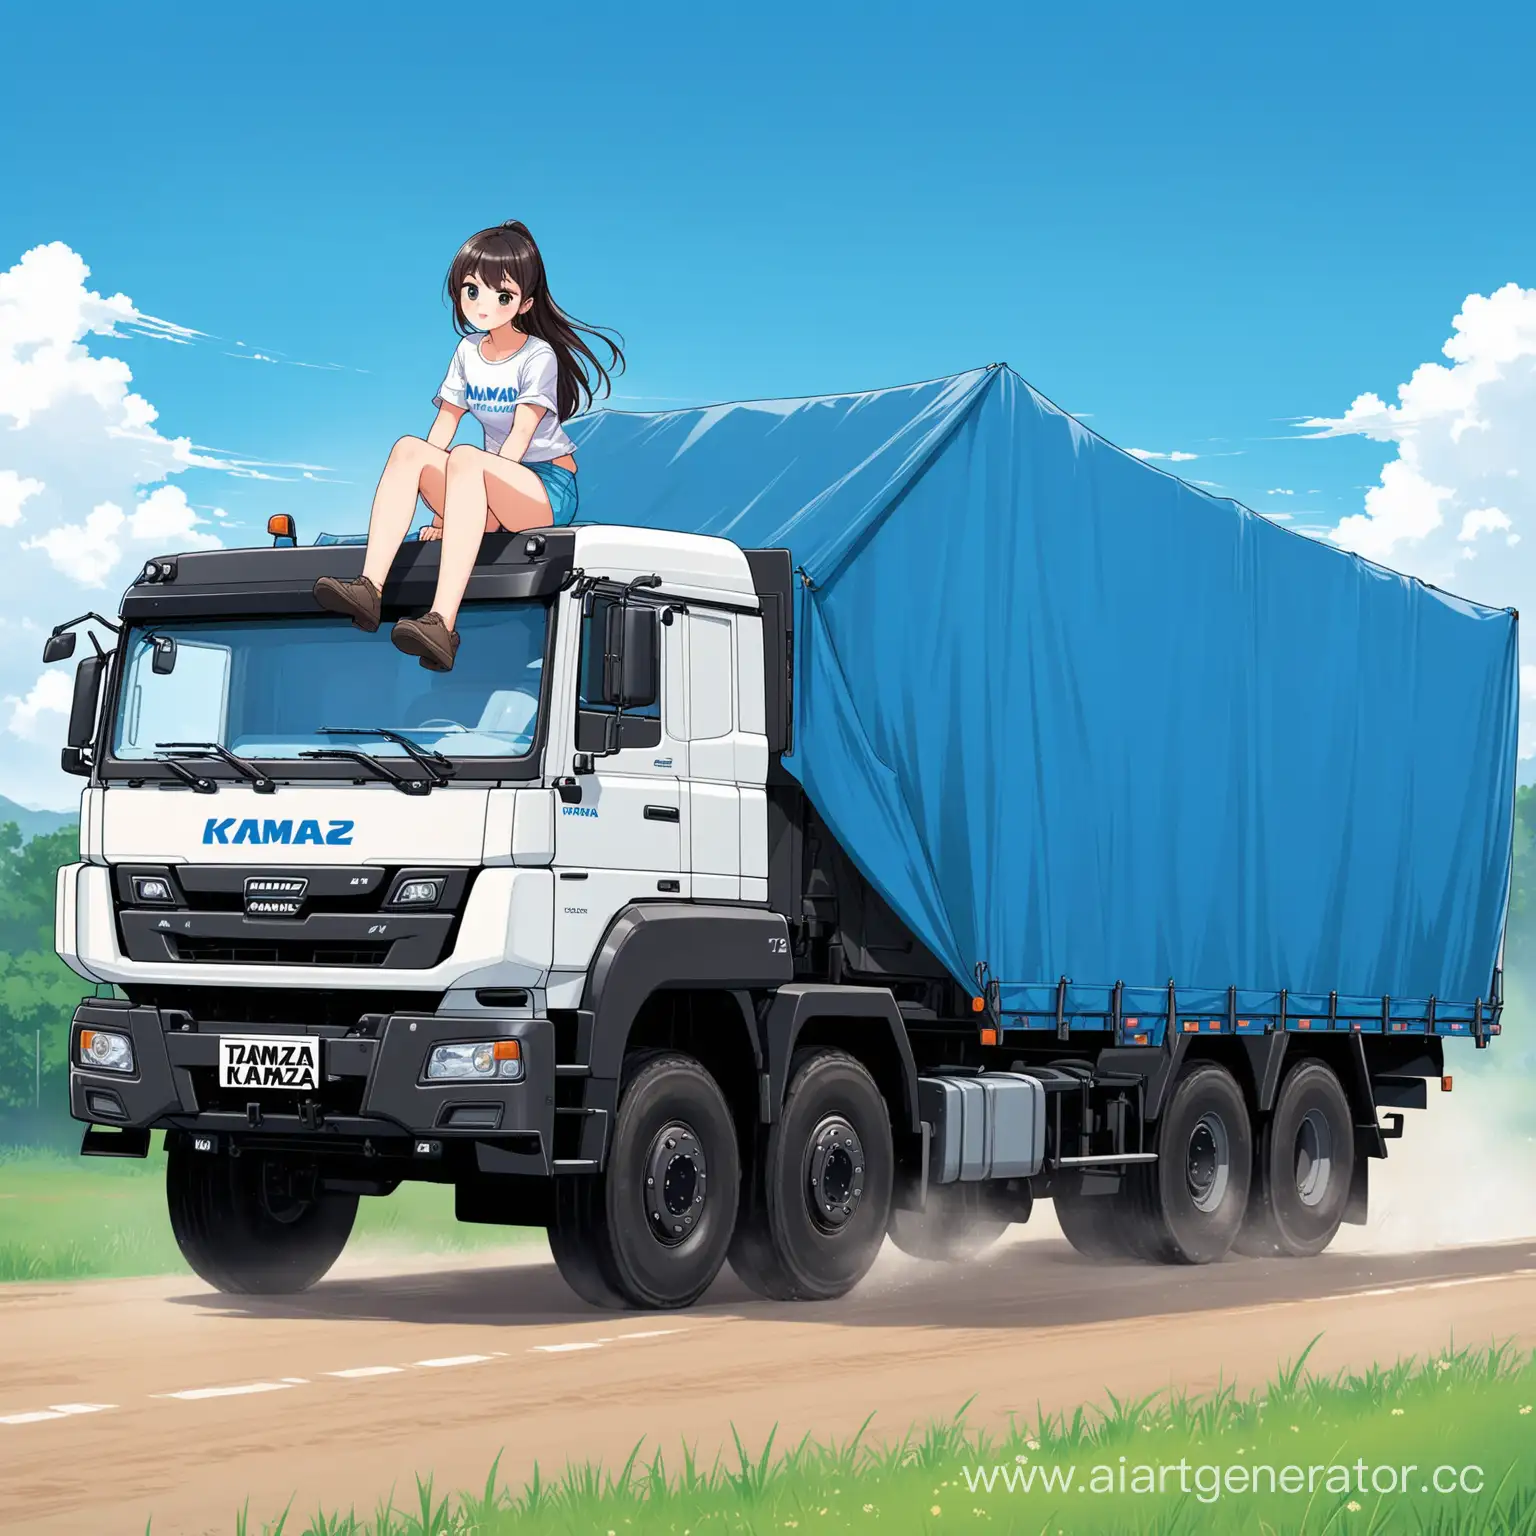 Adorable-Anime-Girl-Driving-20Ton-Kamaz-Truck-with-NATCAR-Inscription